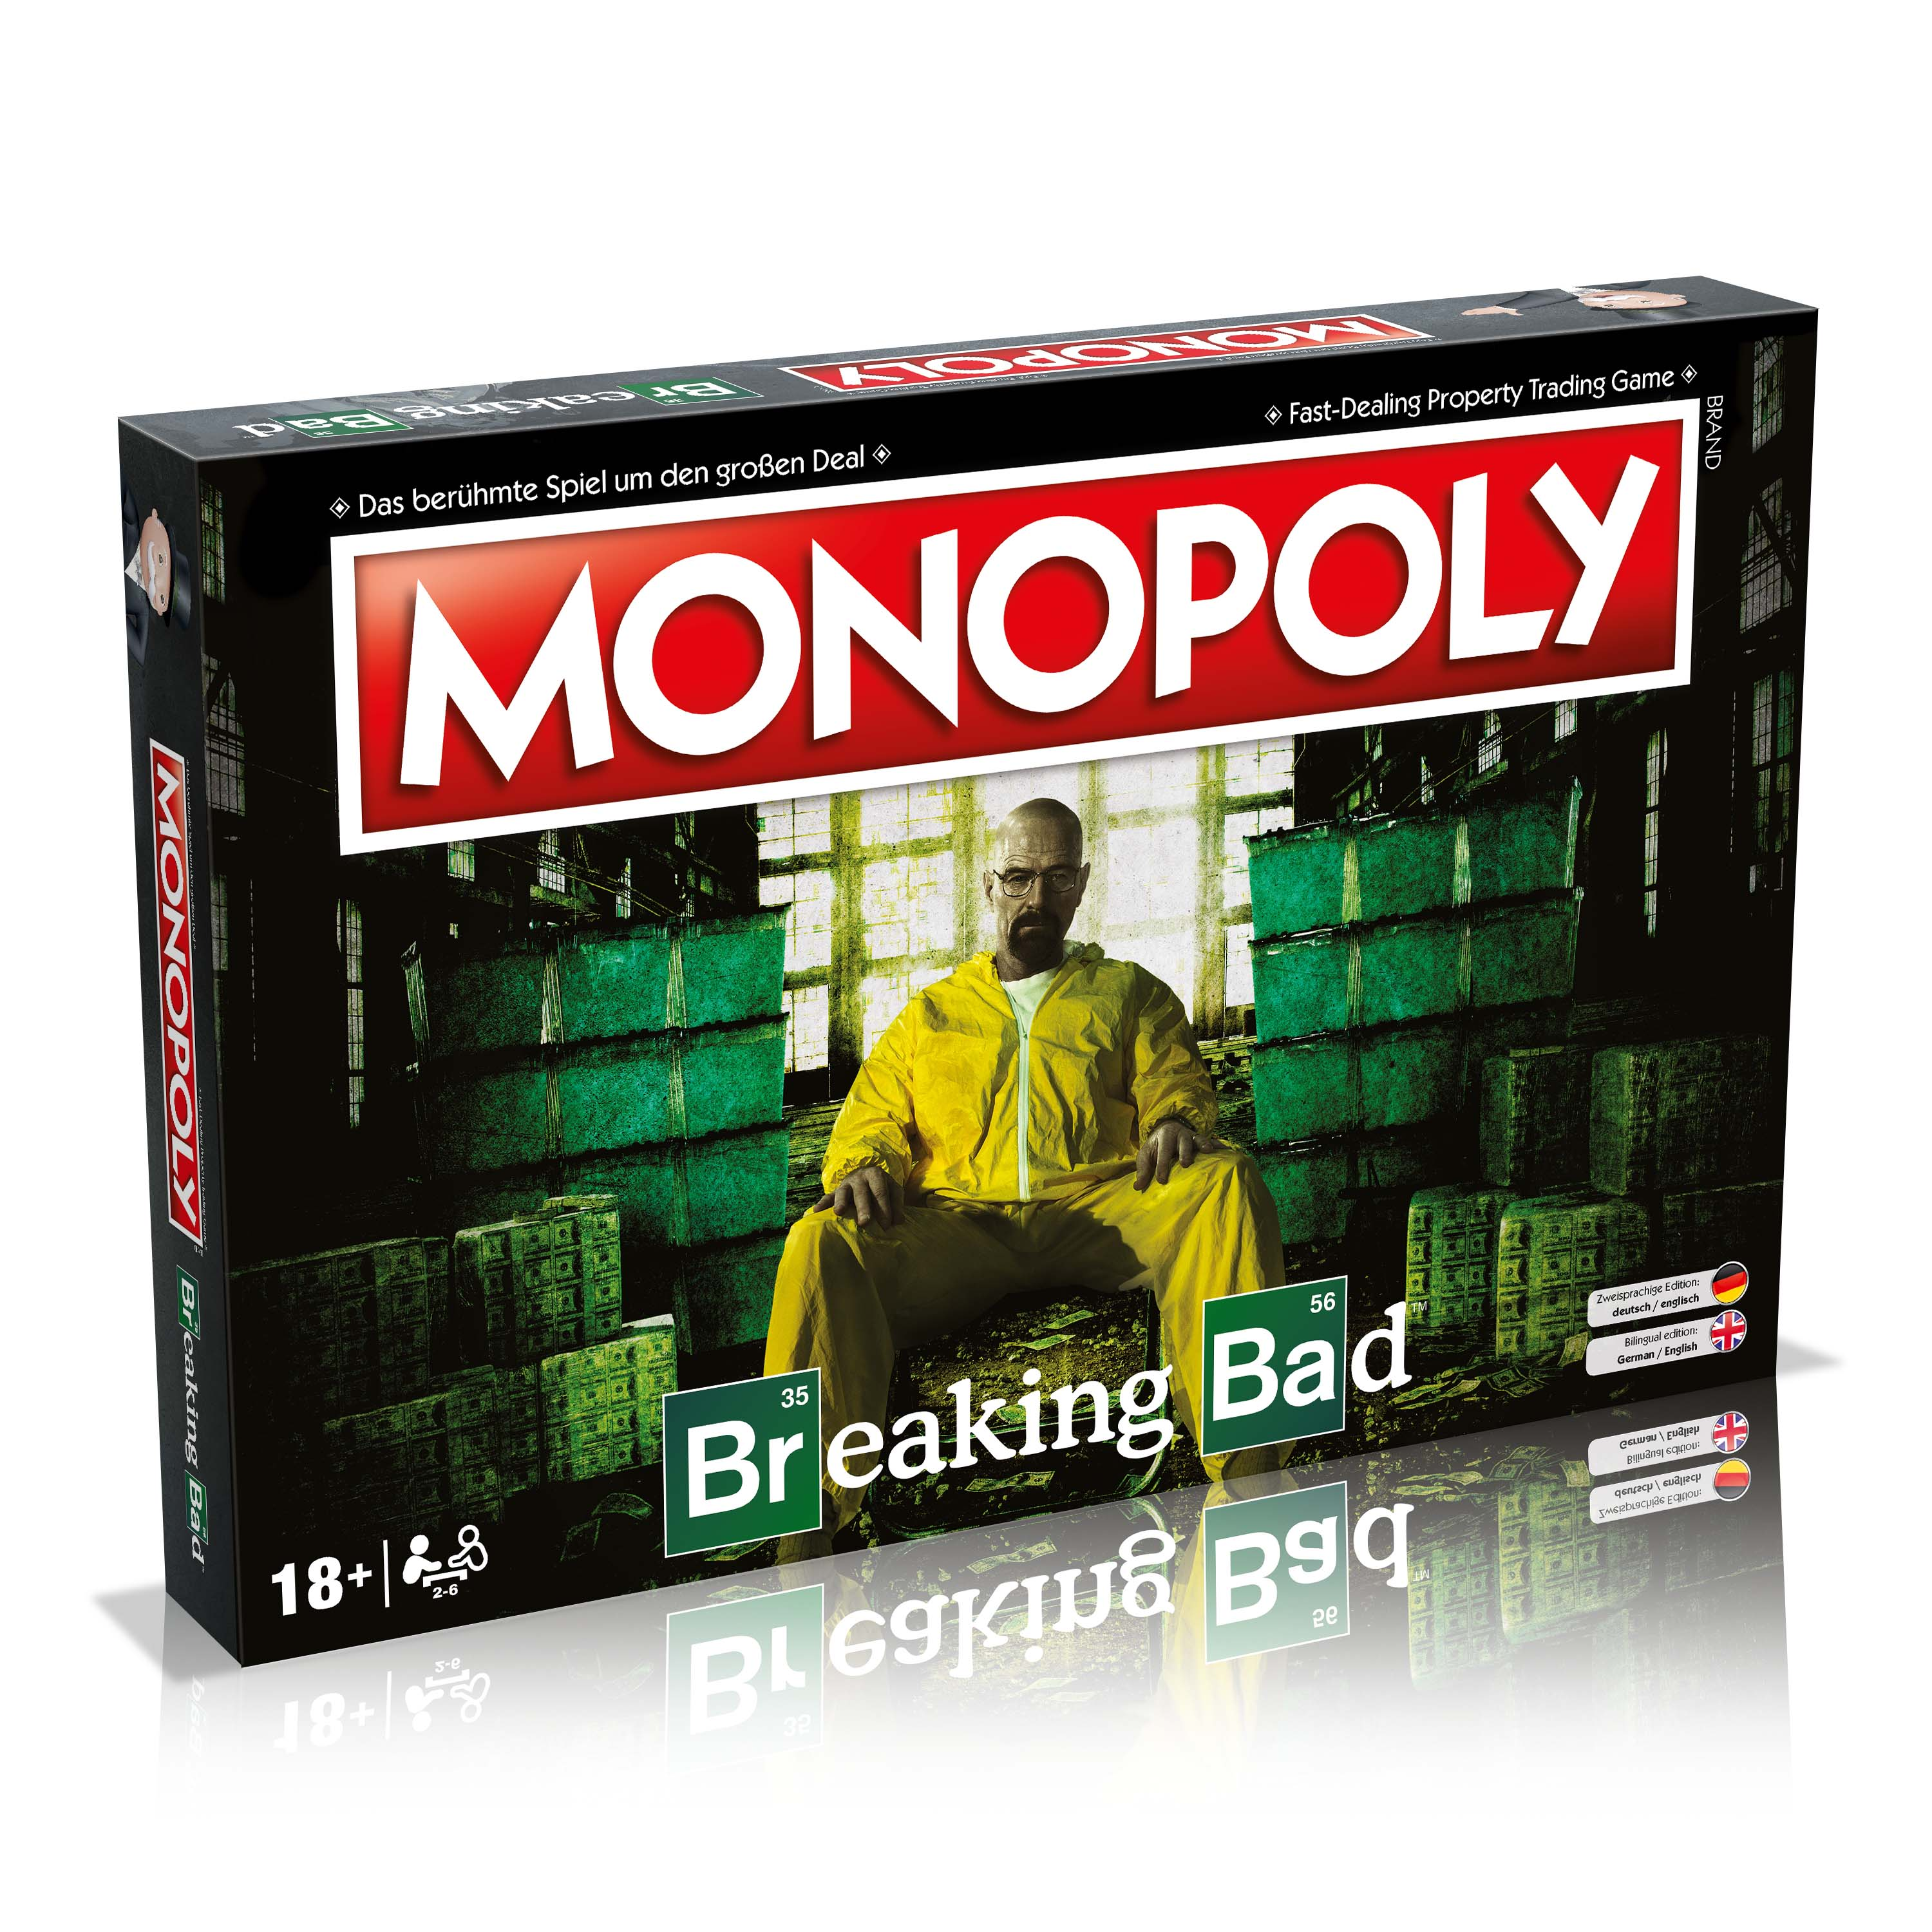 Bad - Breaking Monopoly